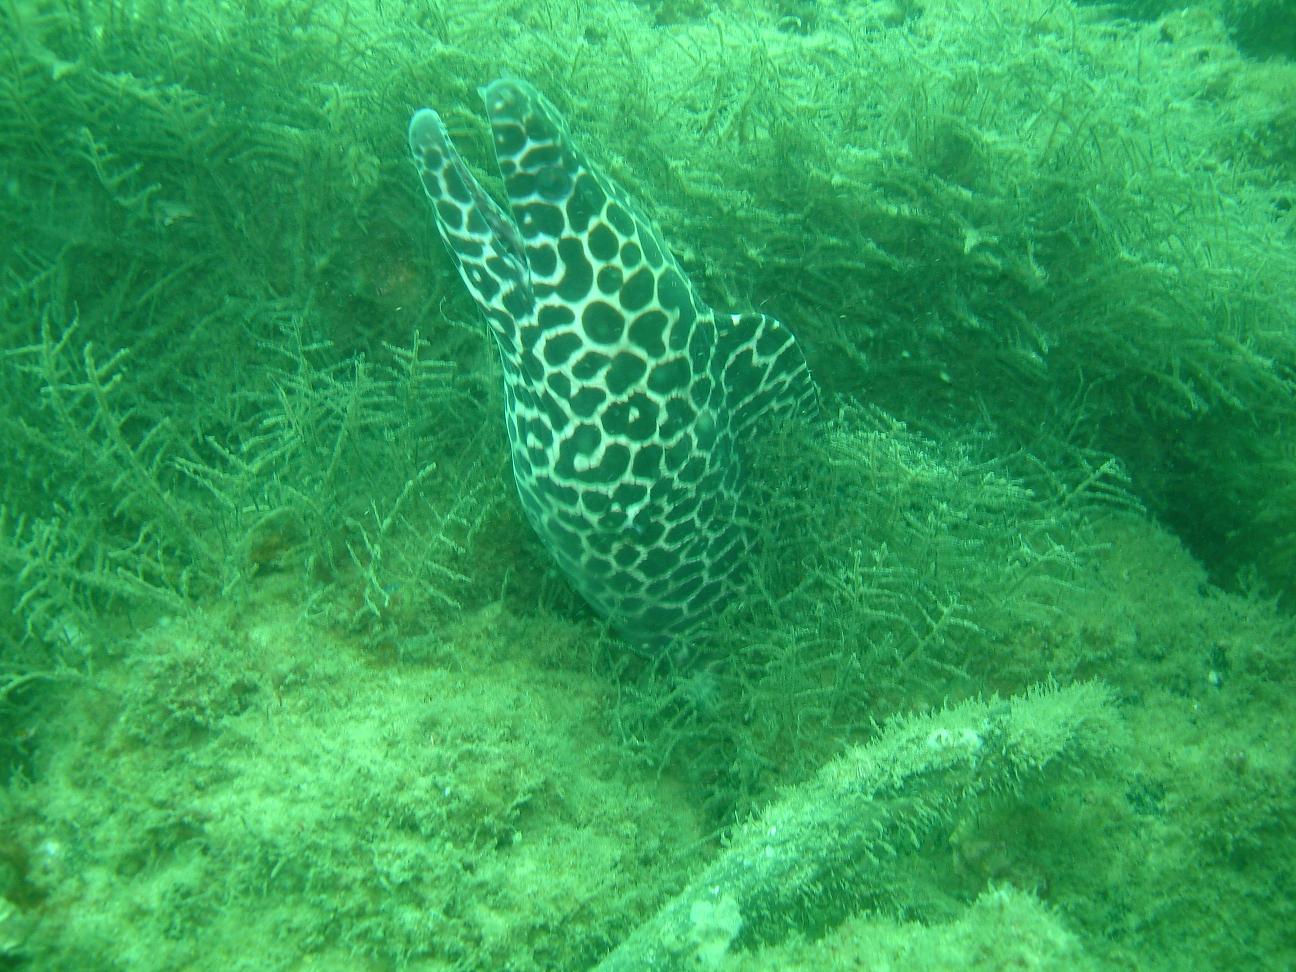 Moray Eel at Wave Break Island